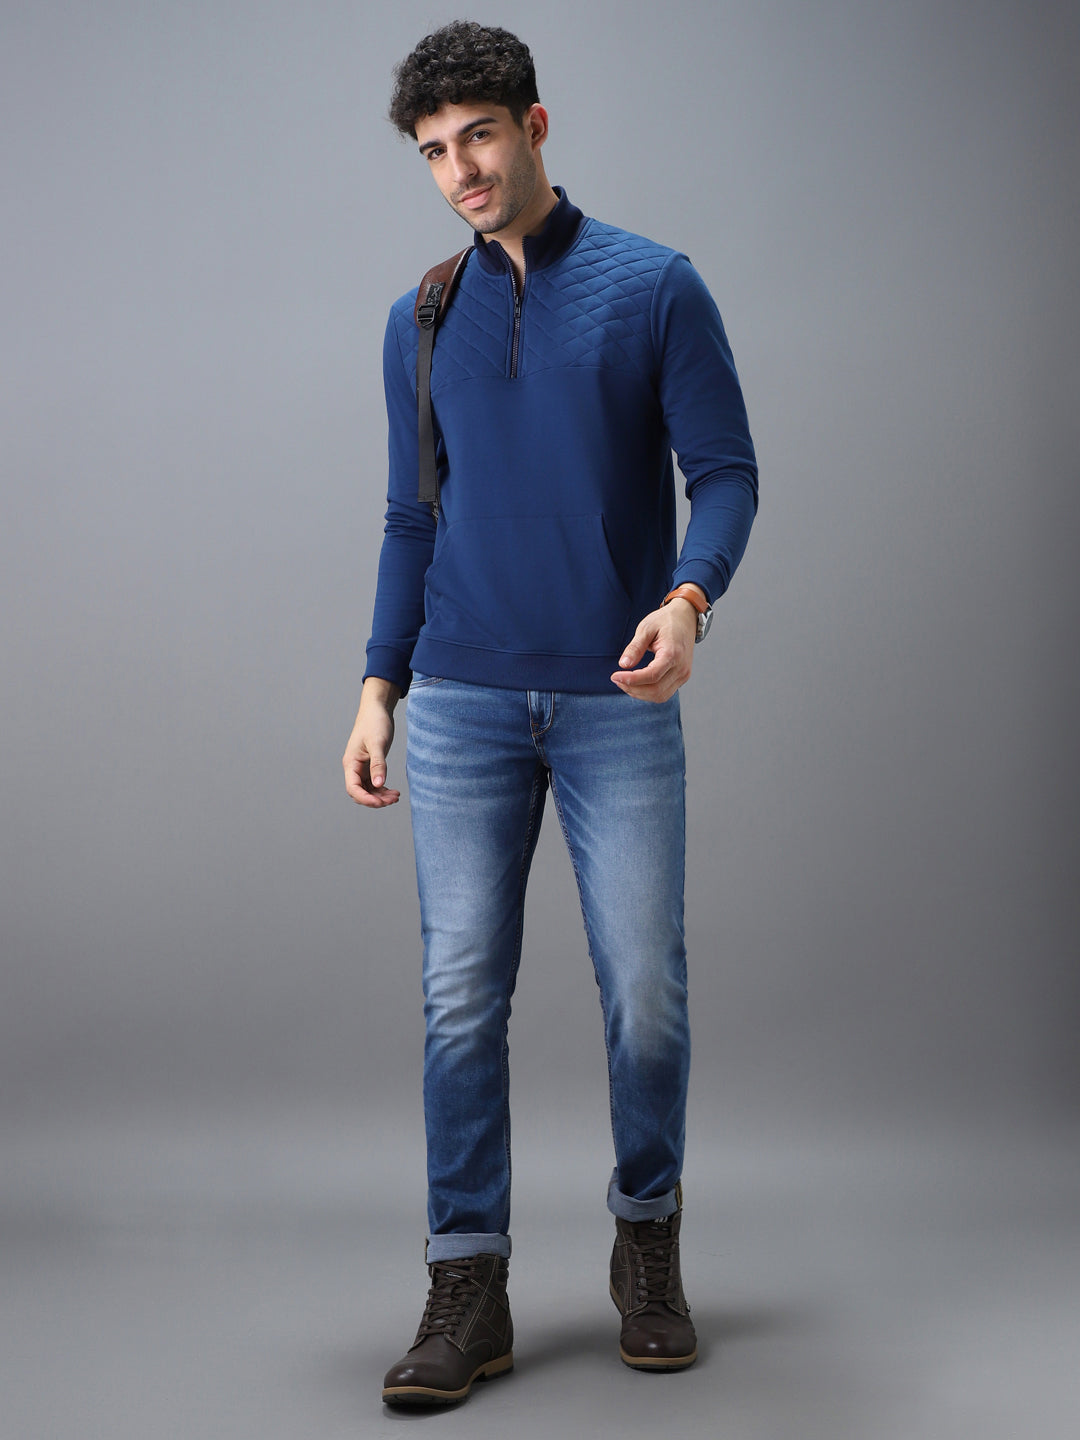 Men's Blue Cotton Solid Zippered High Neck Sweatshirt